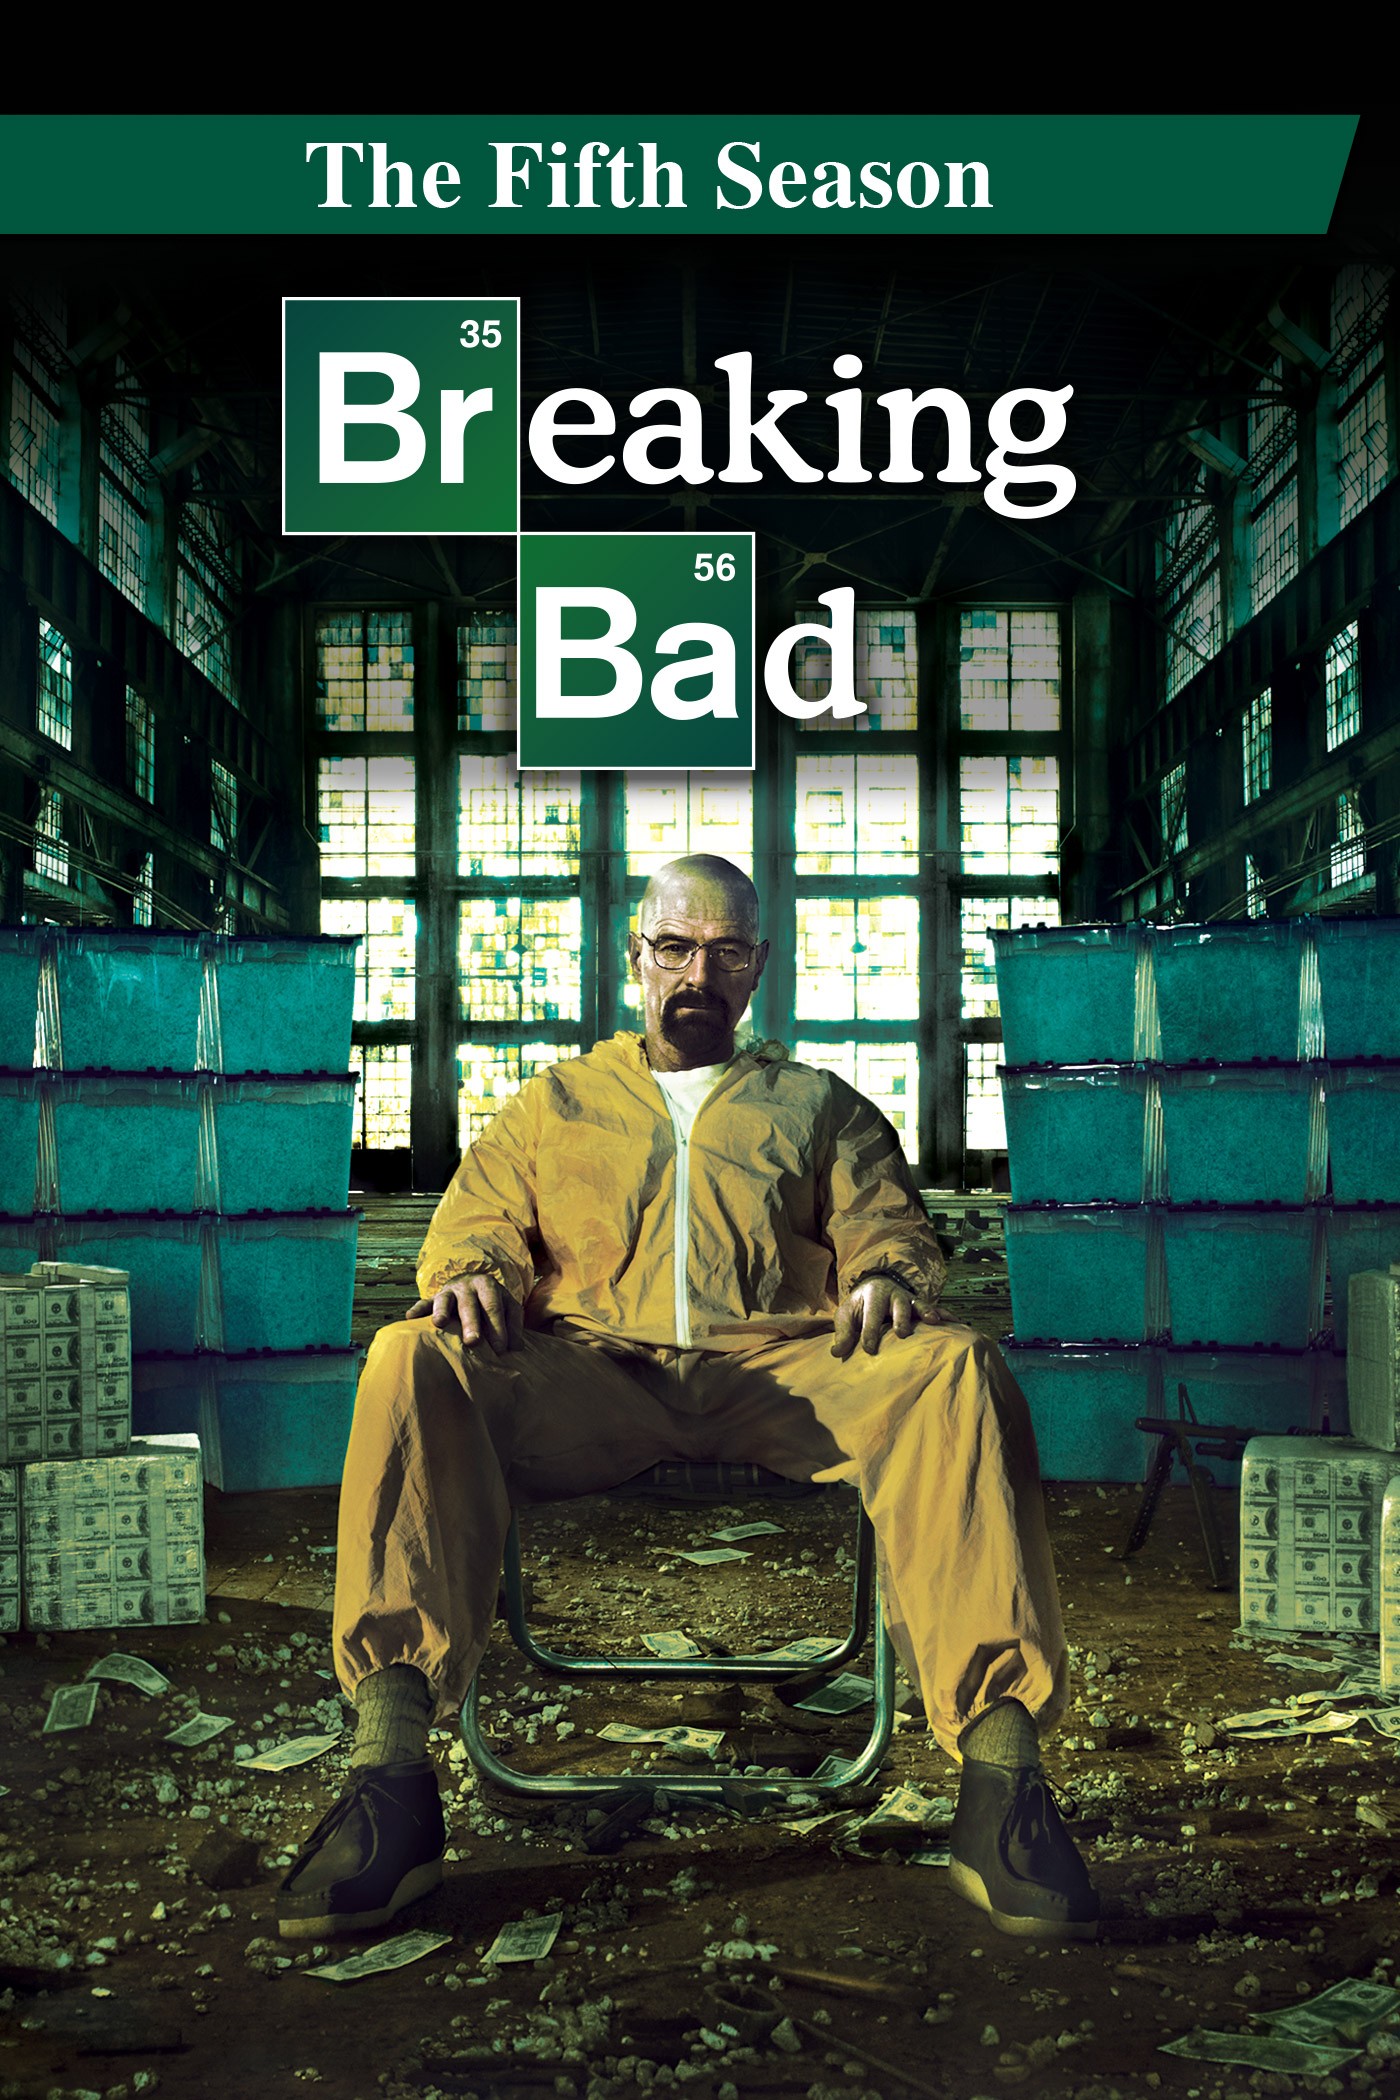 Breaking Bad (season 5) - Wikipedia